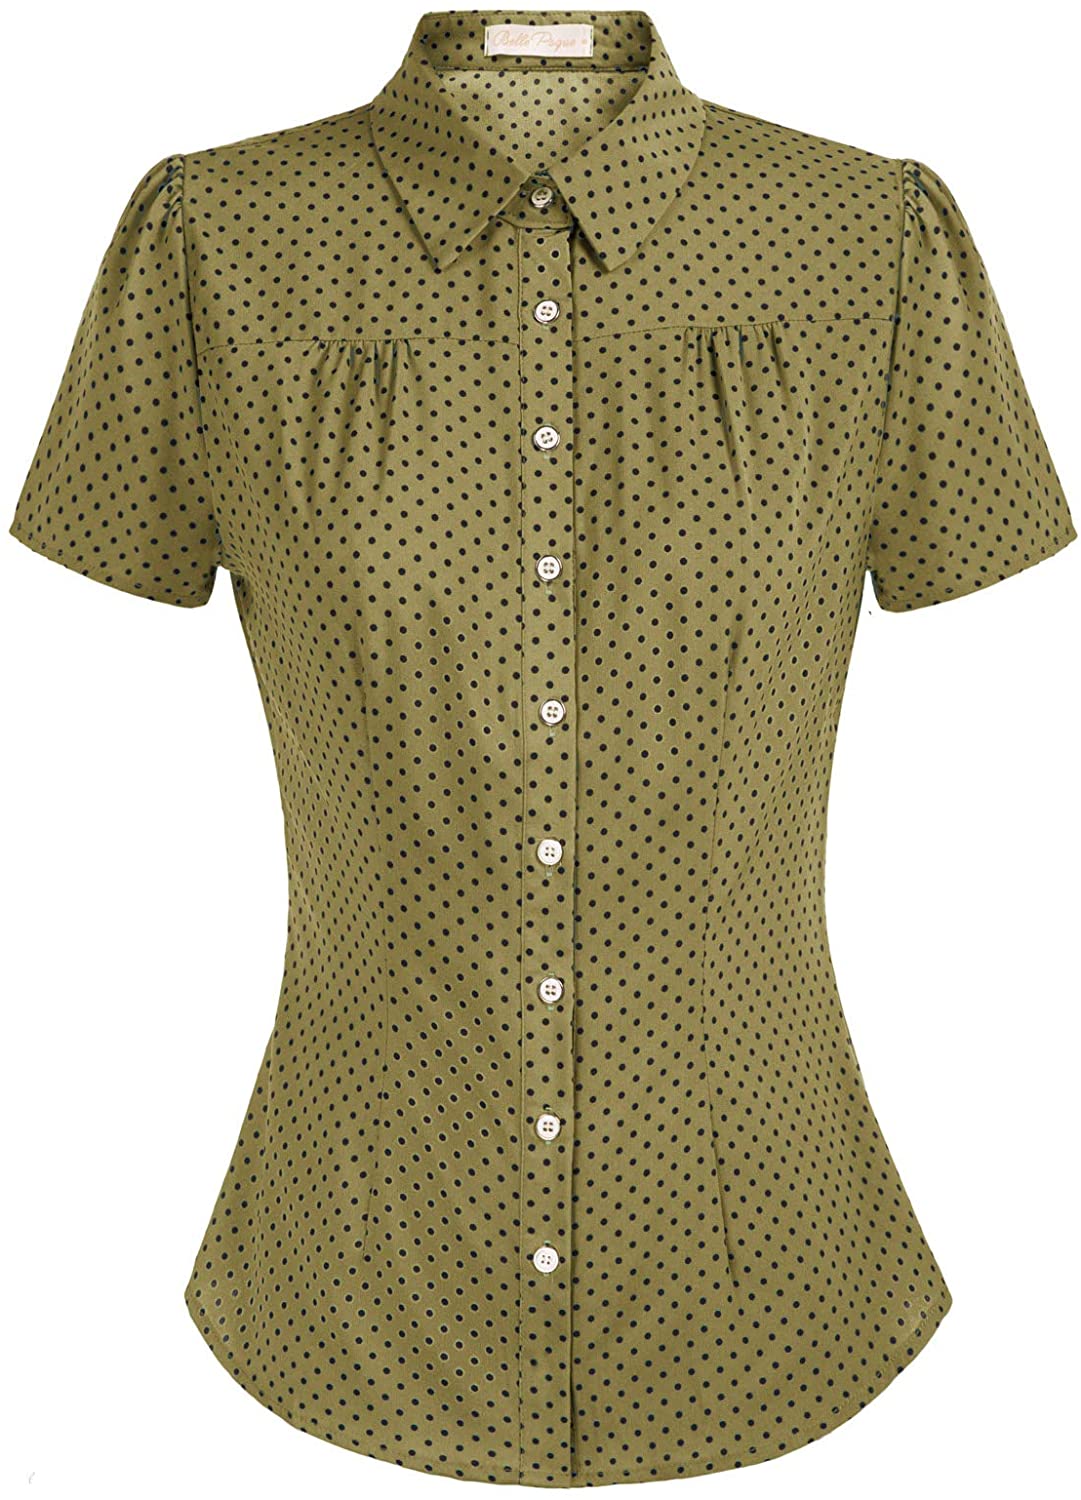 Belle Poque Women's Polka Dots Shirt Tops 1950s Retro Short Sleeve 